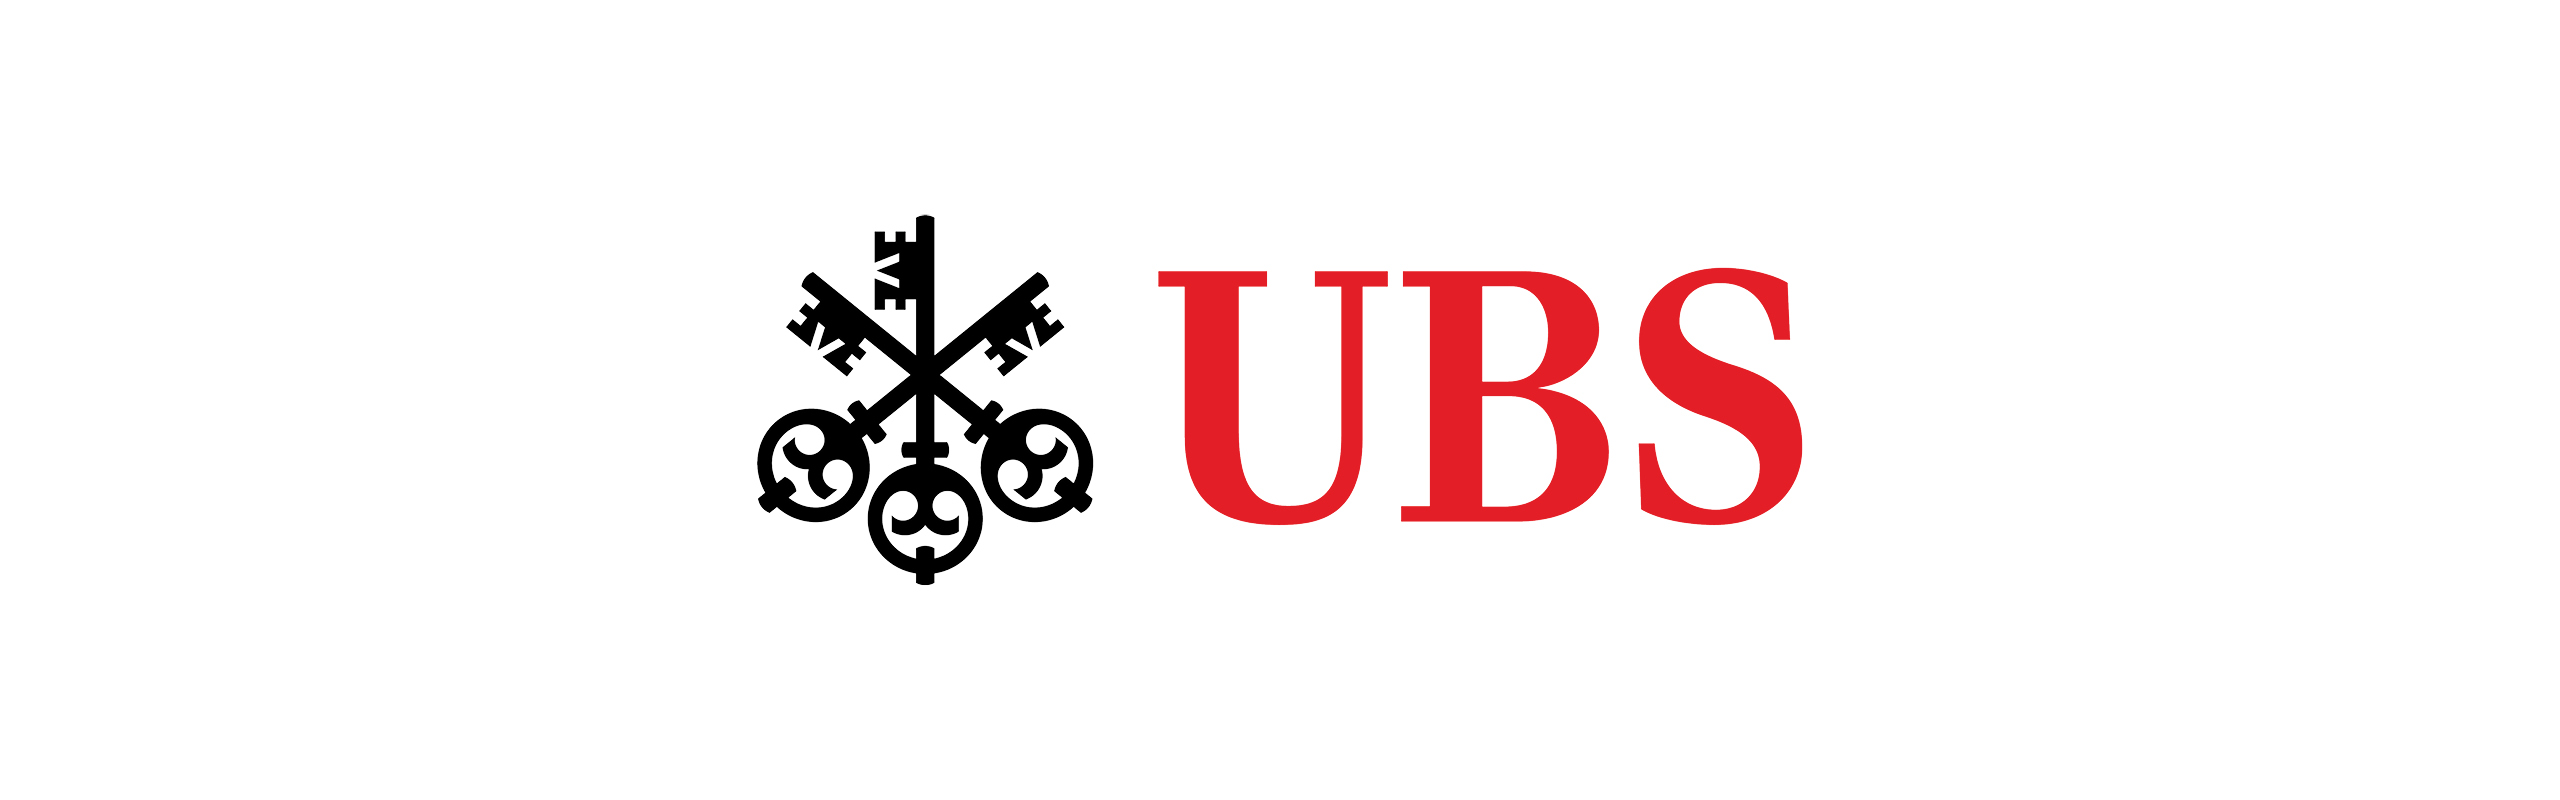 Credit Suisse Index Options Rebranding to UBS